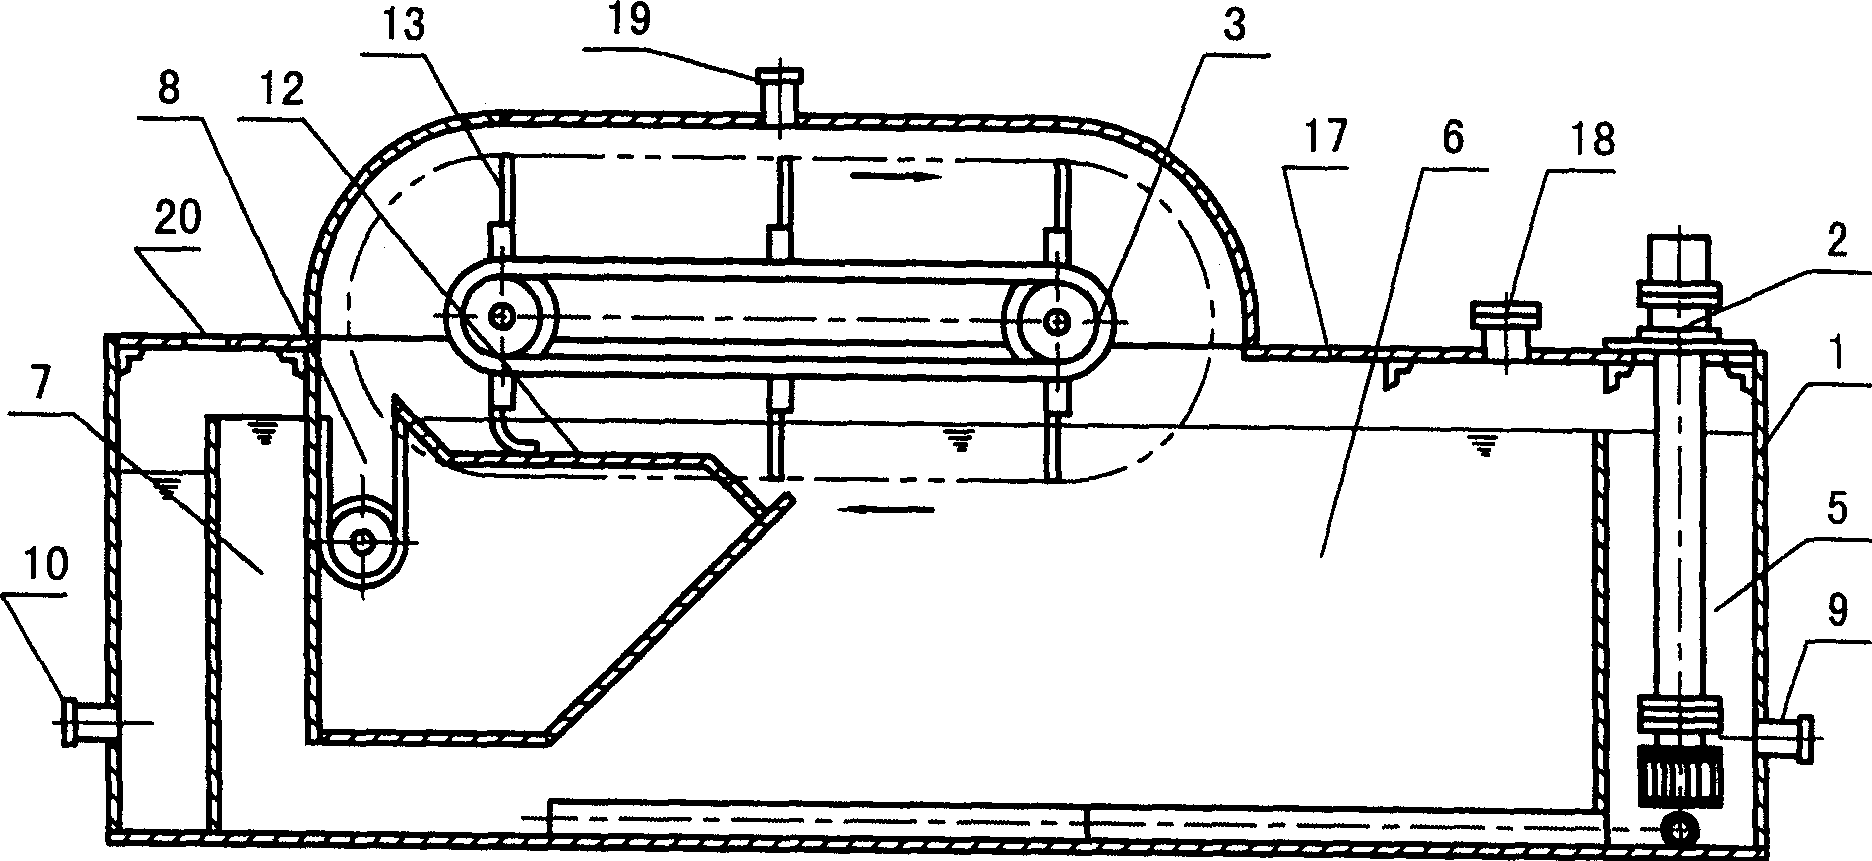 Impeller air-entrainer air-float device